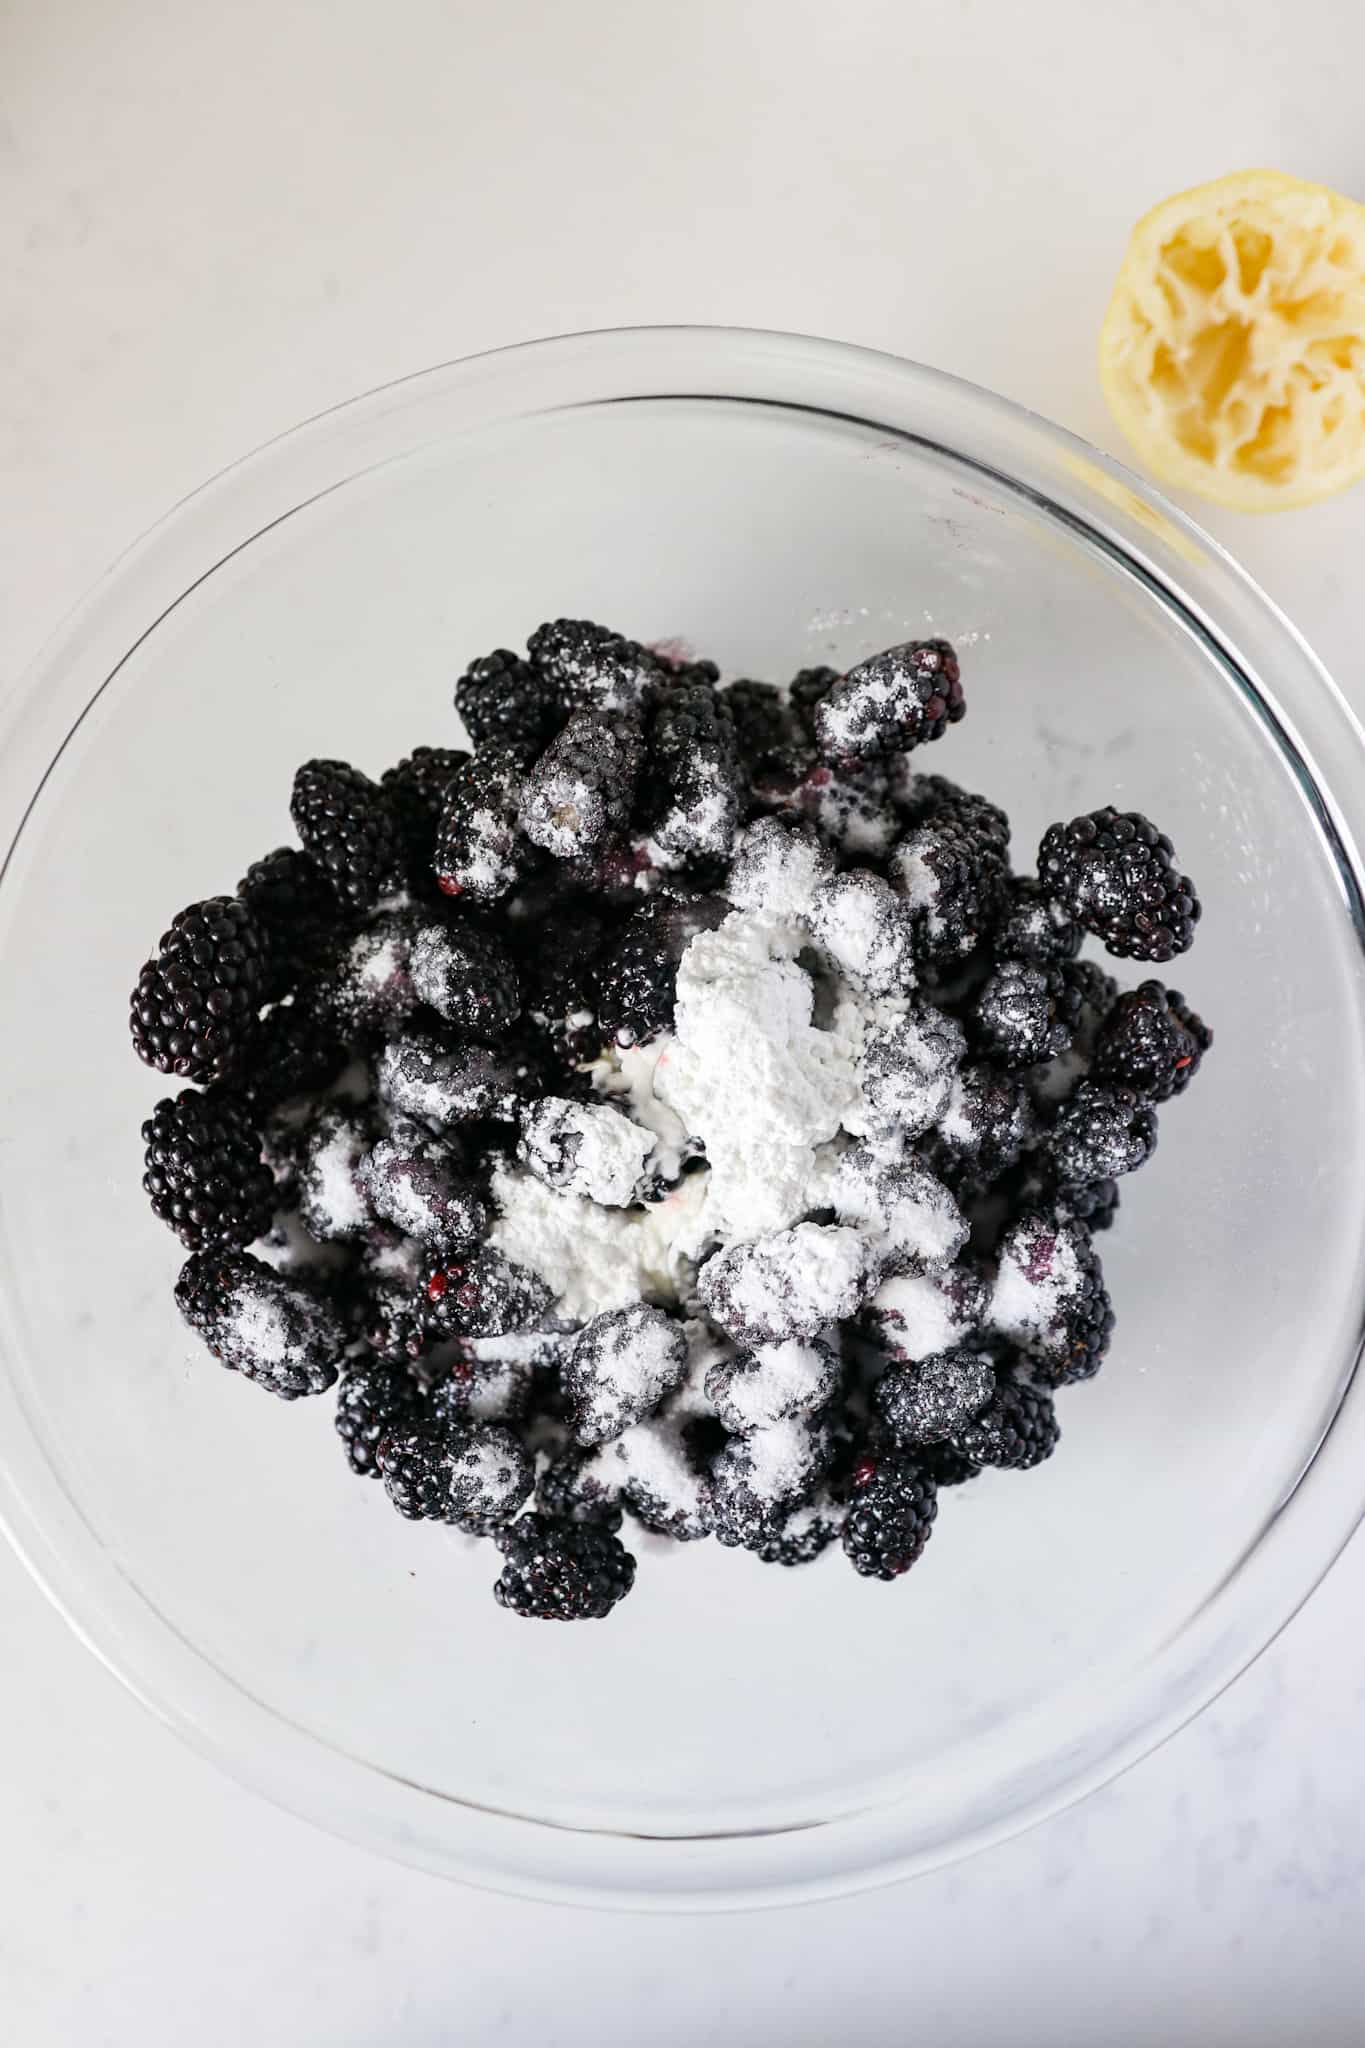 Blackberries in a bowl with cornstarch, sugar and lemon juice.